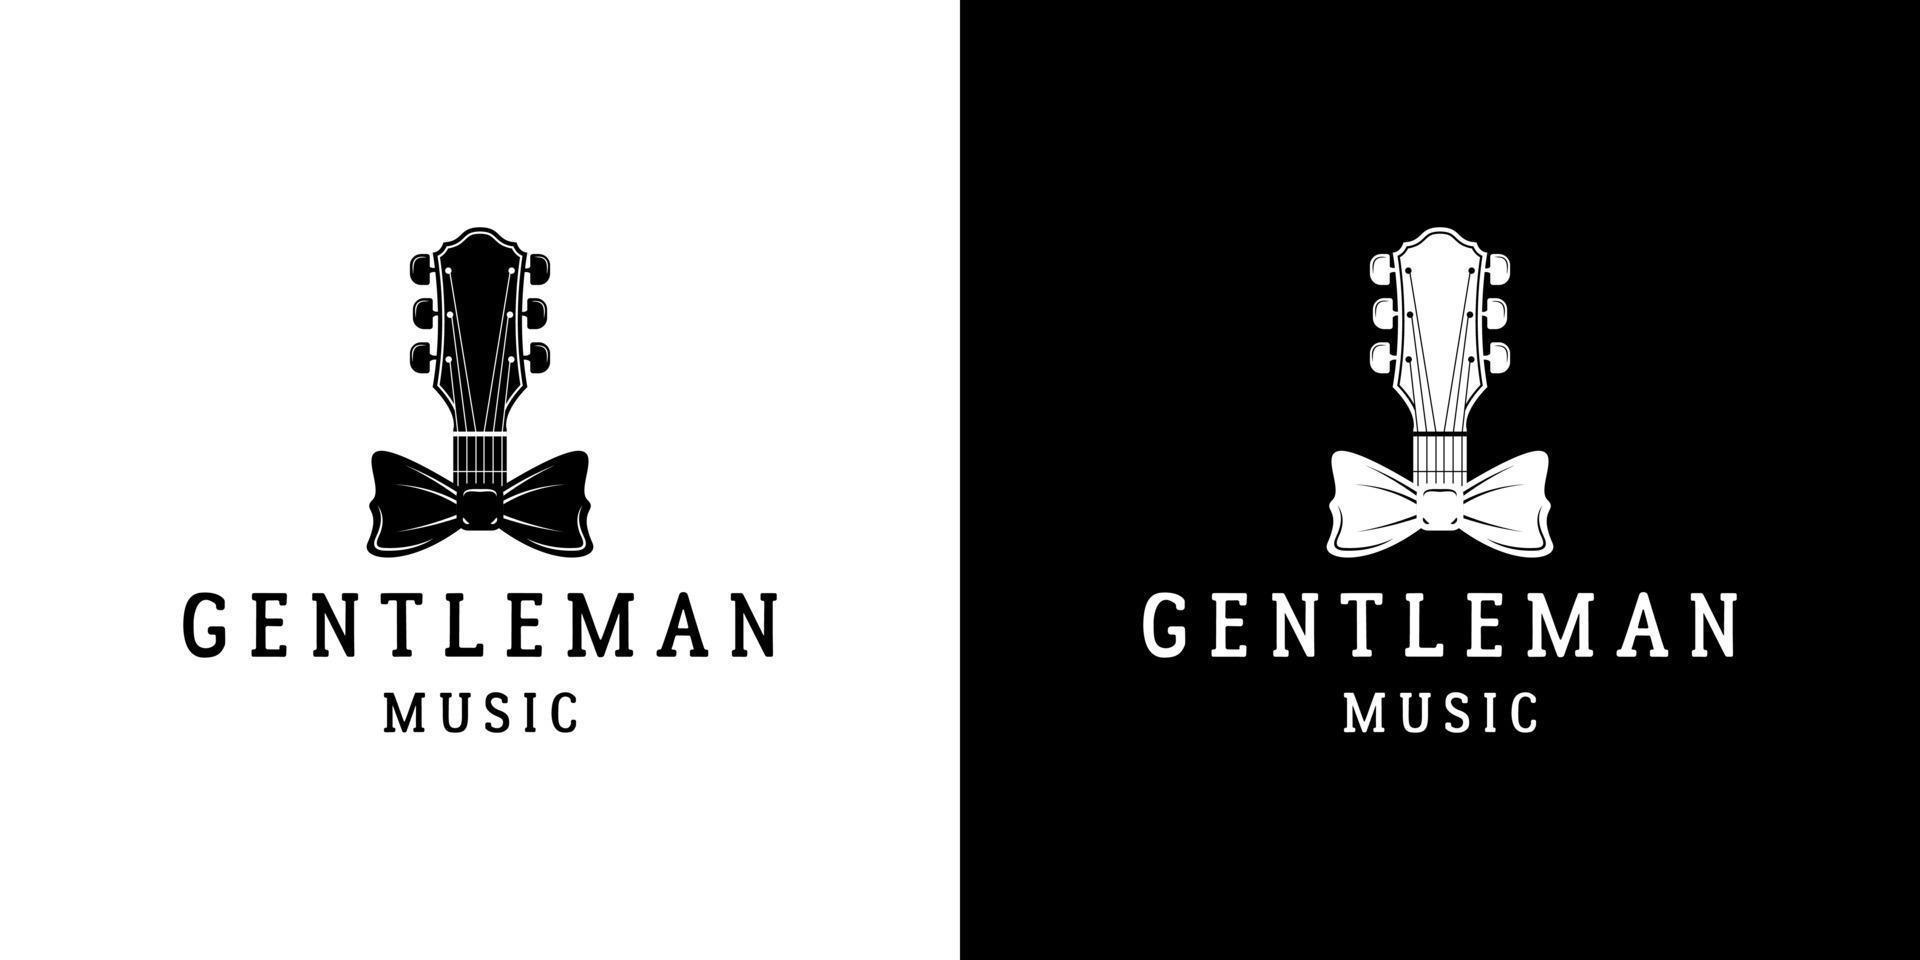 guitar and bow tie gentleman music logo design vector